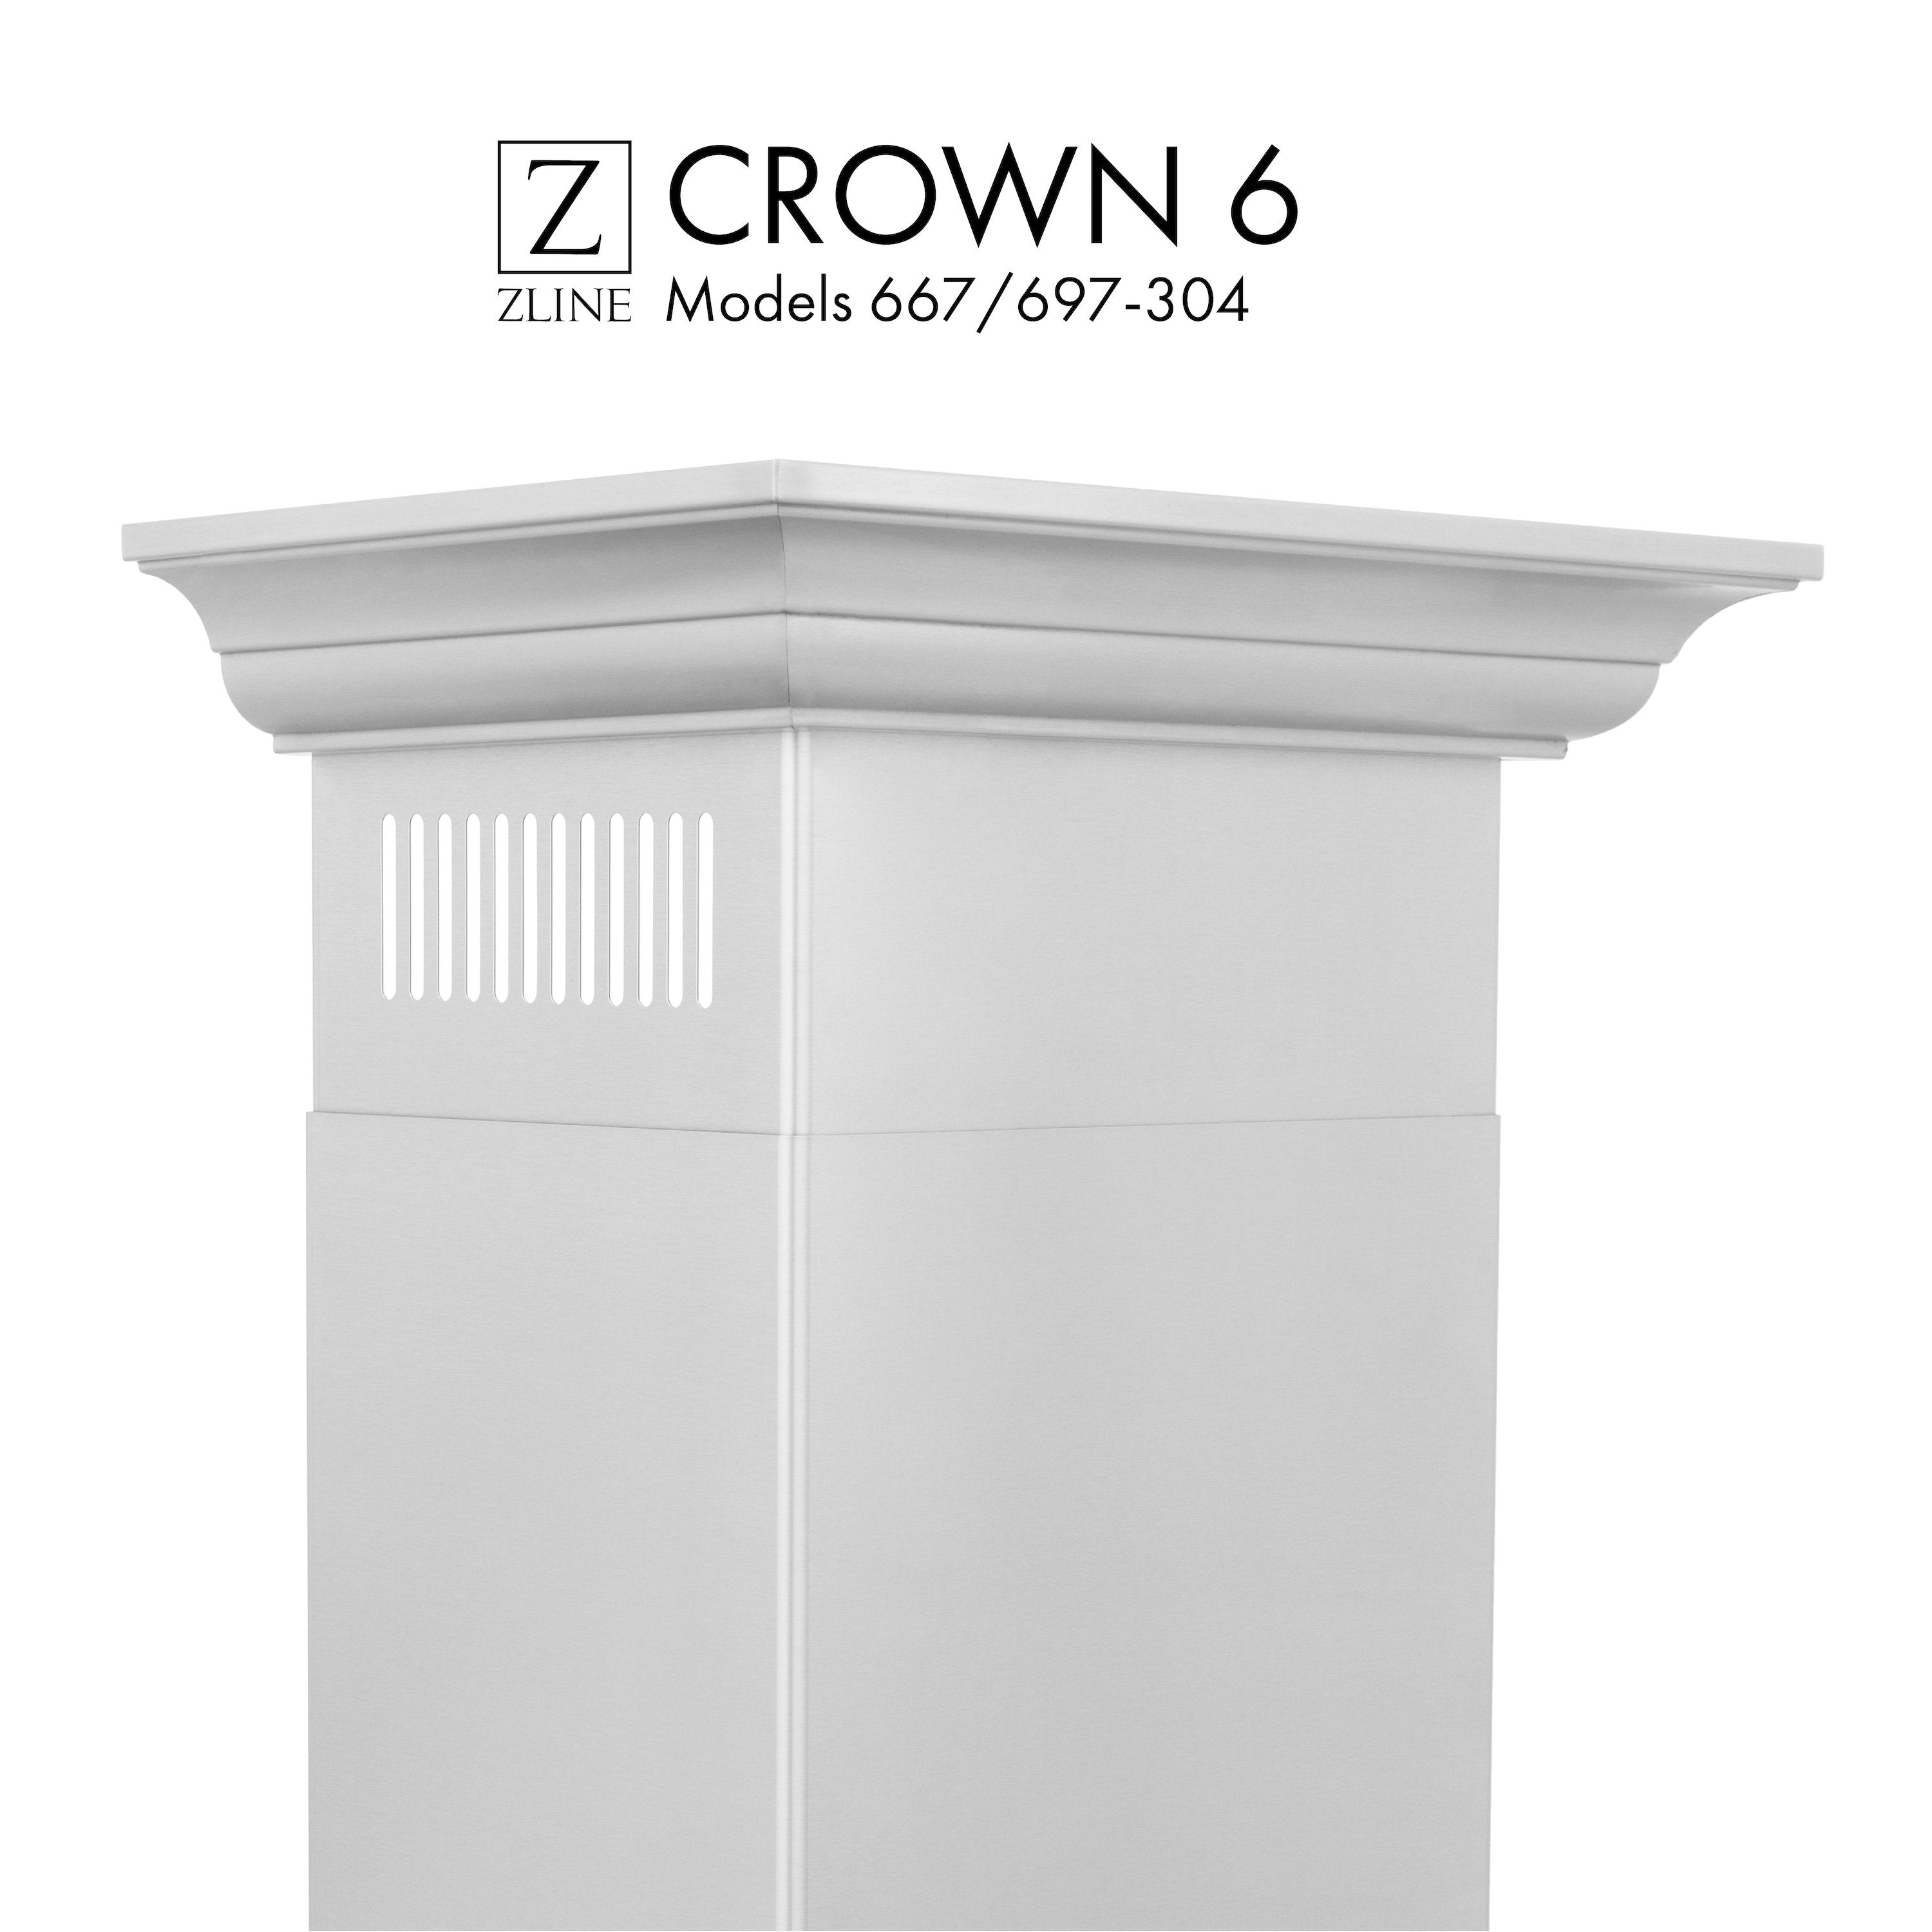 ZLINE Crown Molding Profile 6 for Wall Mount Range Hood (CM6-667/697-304)